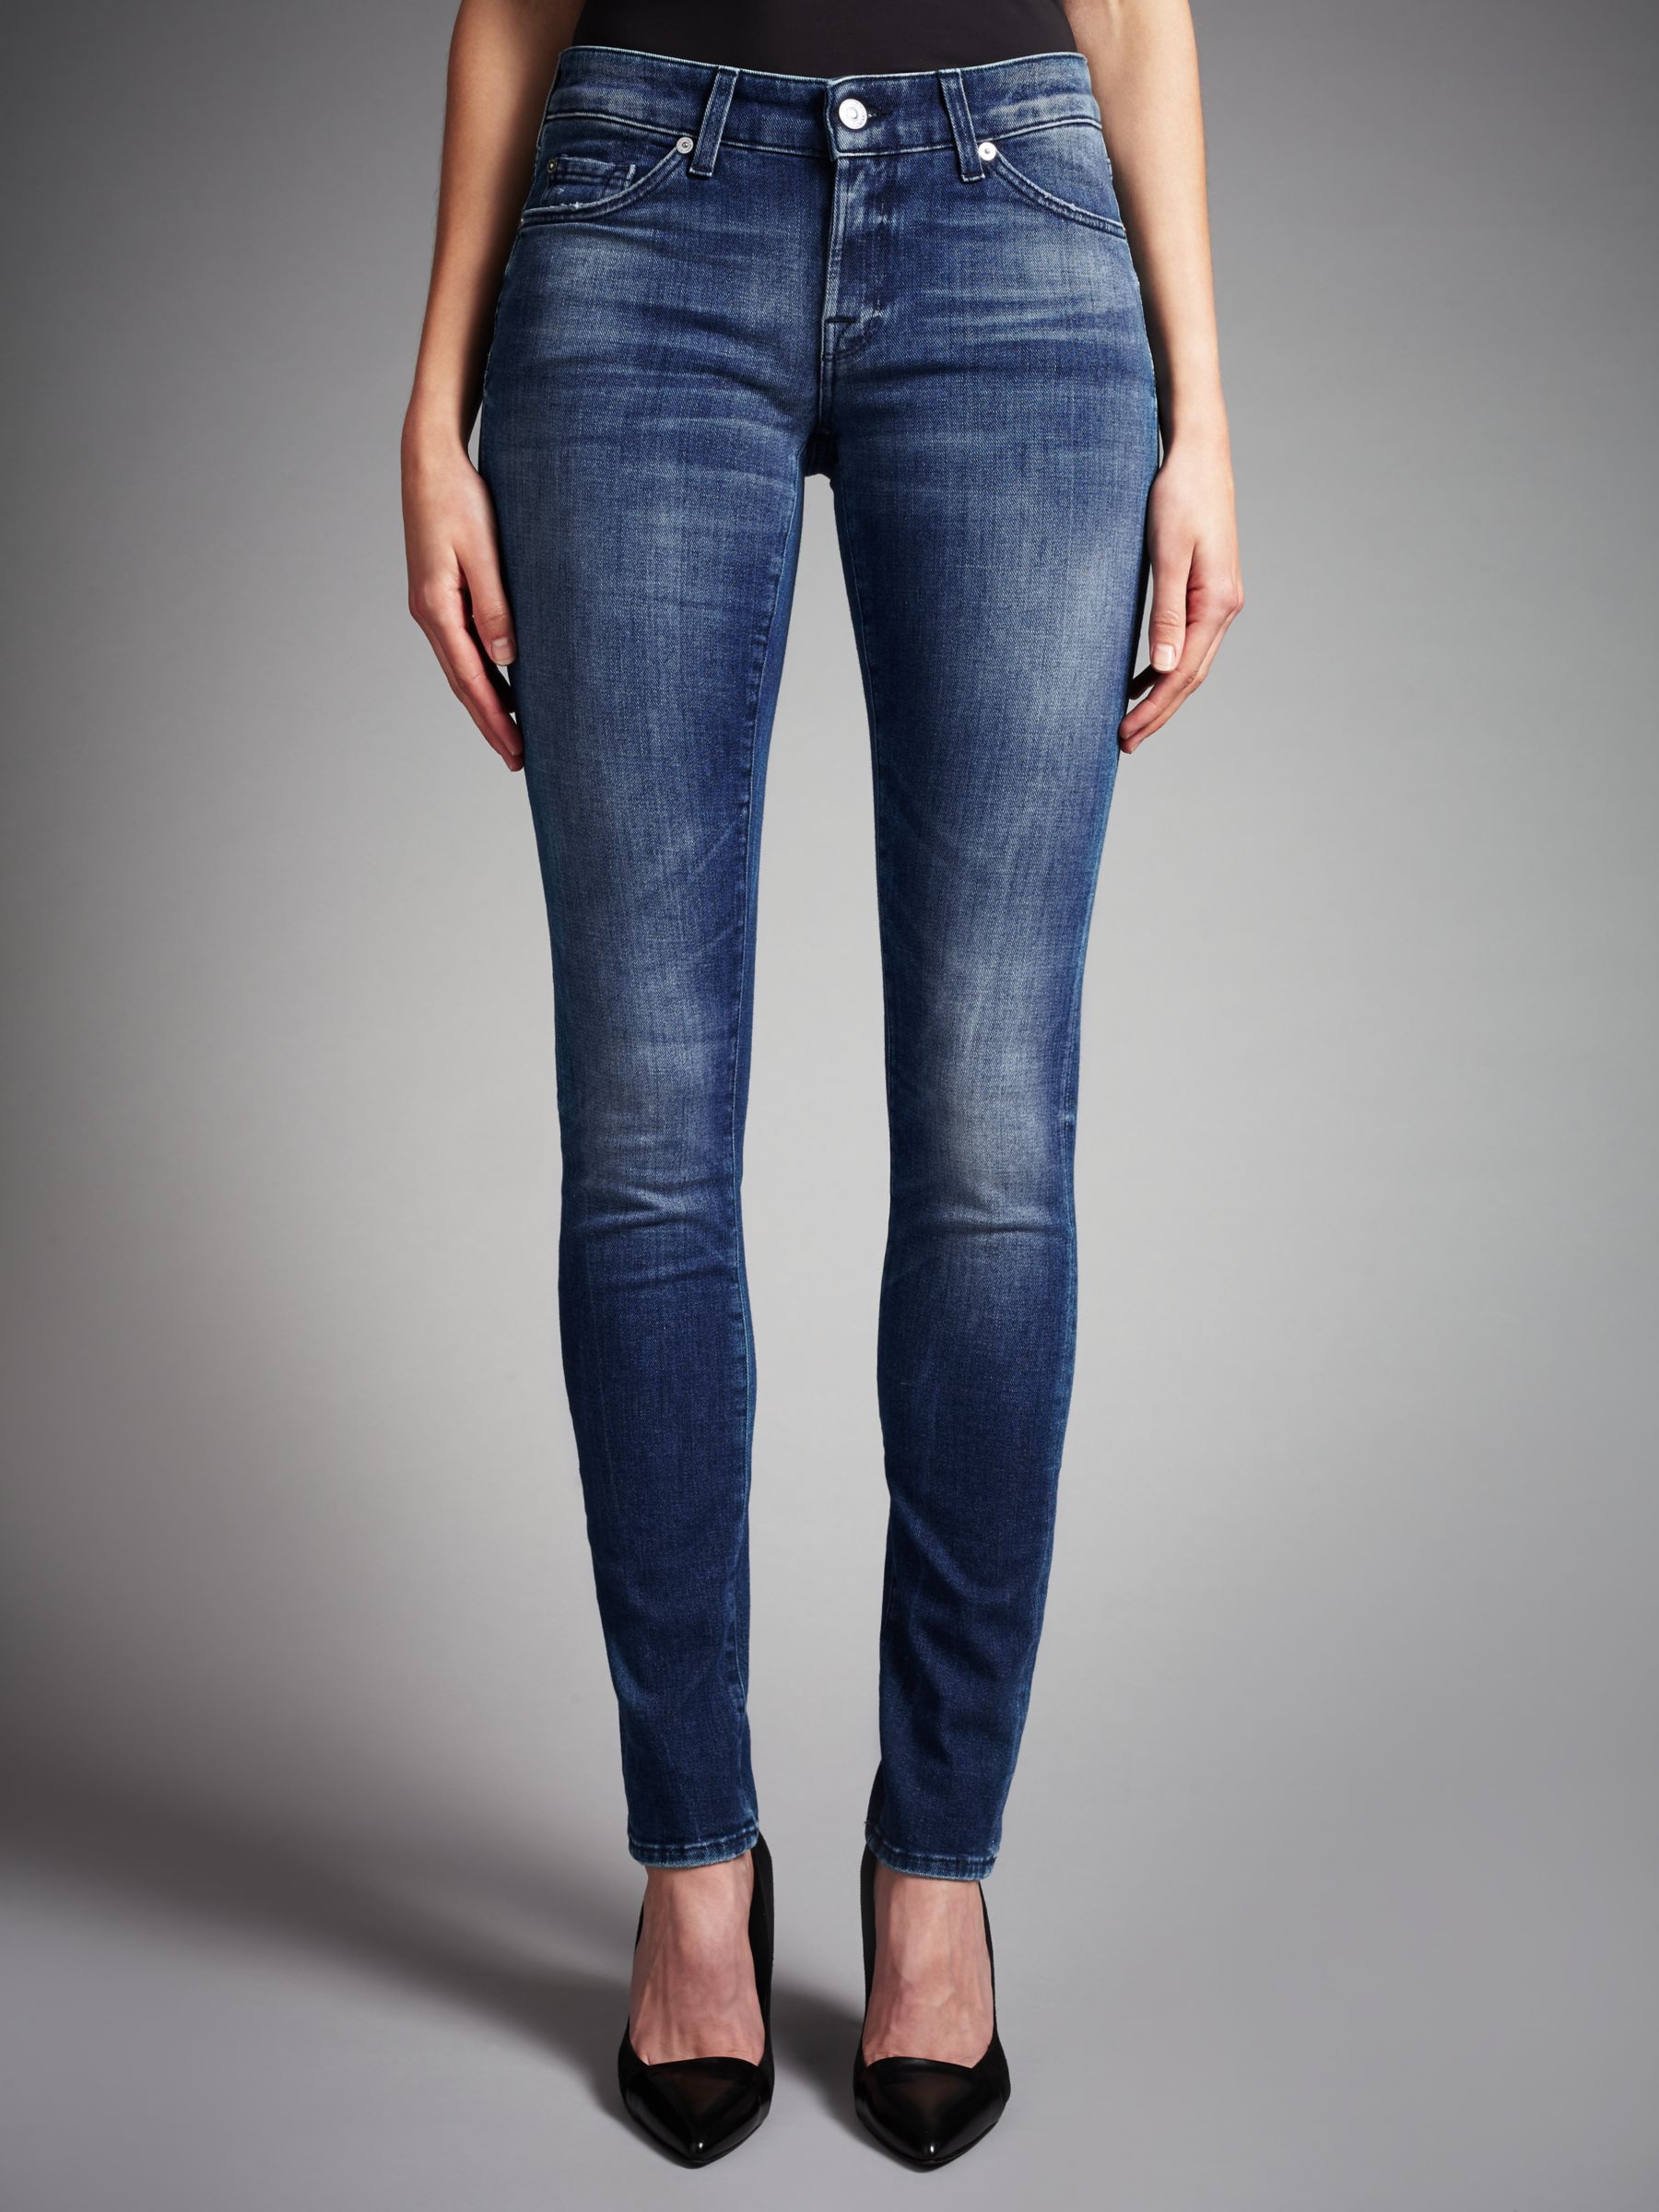 burton tapered jeans